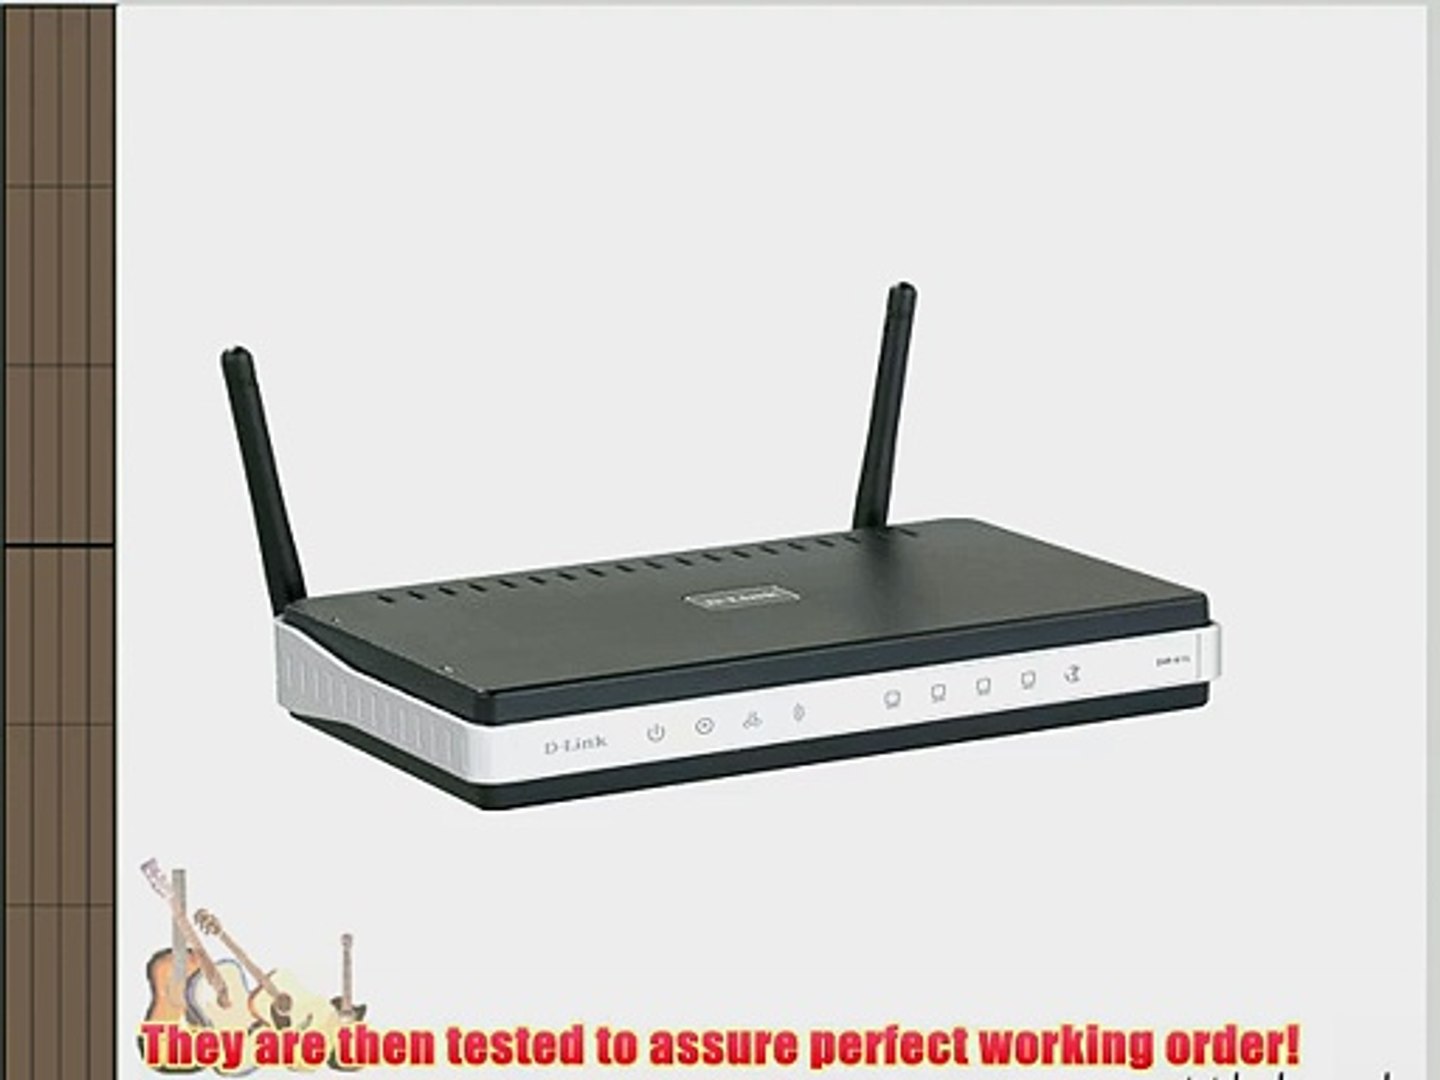 DD-WRT - D-Link DIR-615 Router Repeater Bridge USB VPN Ready WiFi WAN  Wireless N Access Point - video Dailymotion